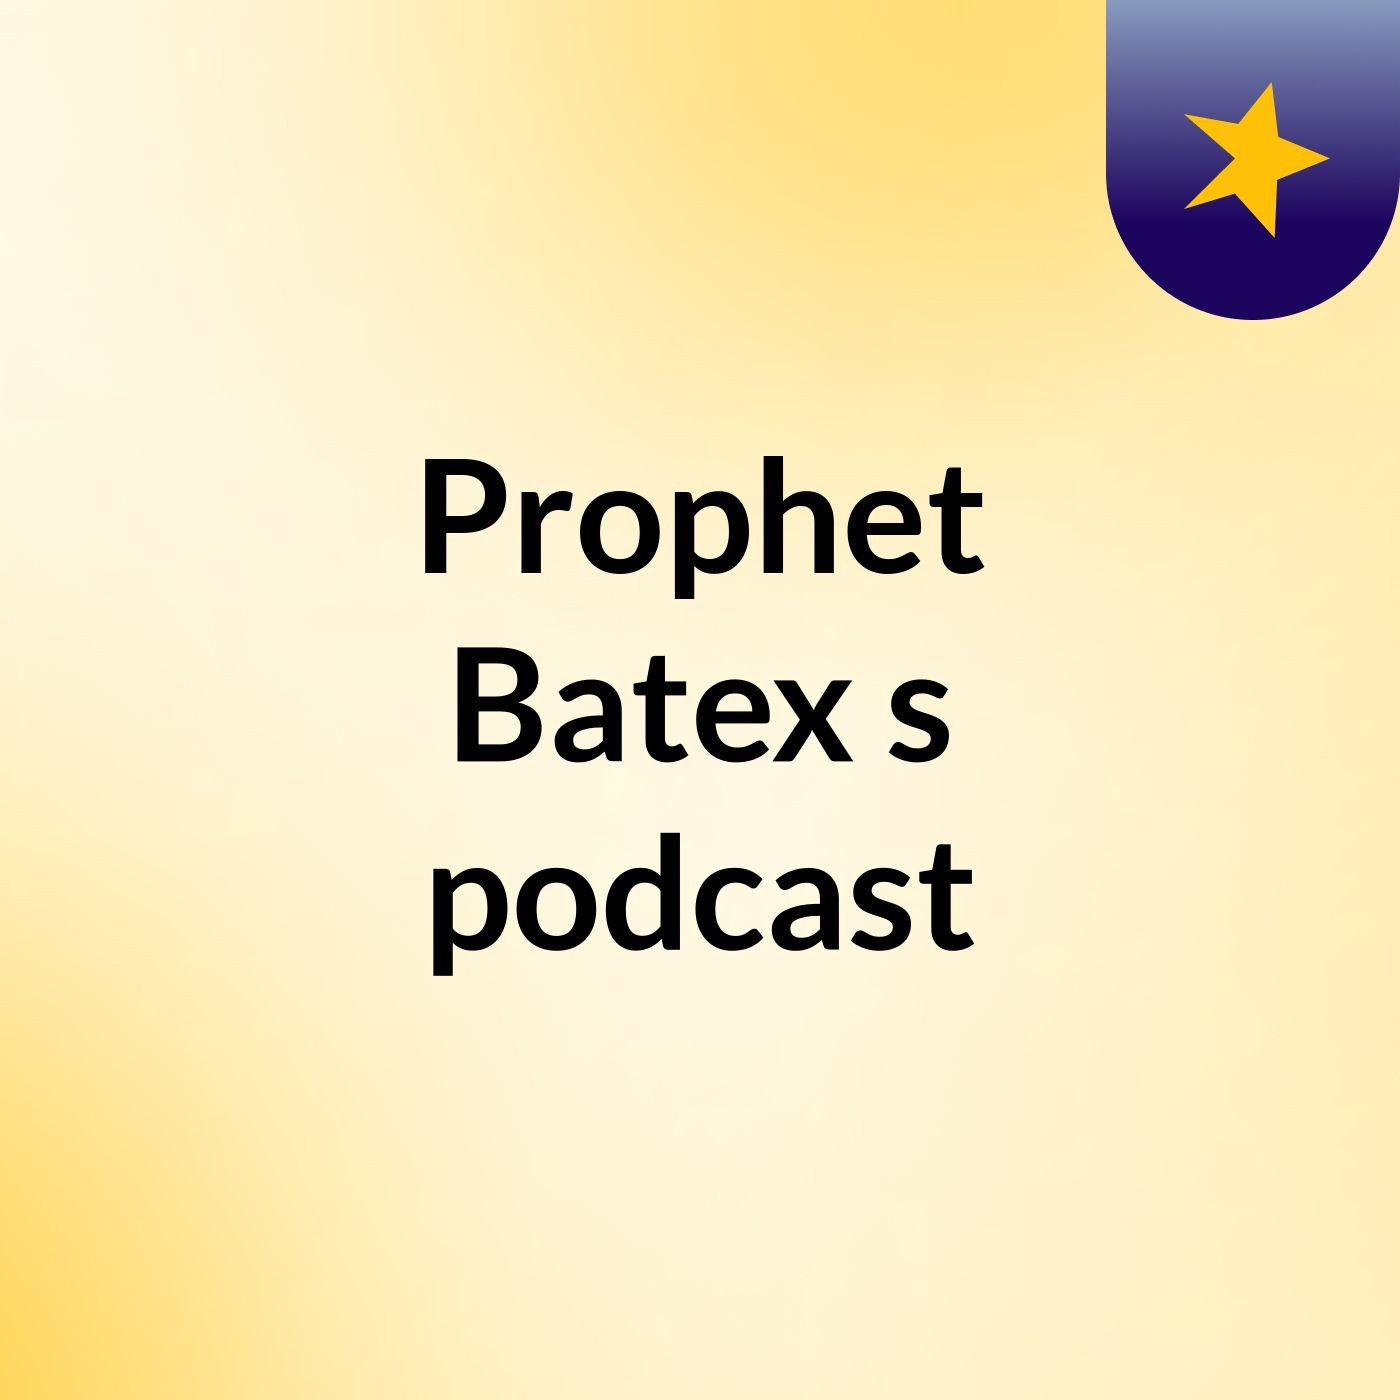 Prophet Batex's podcast